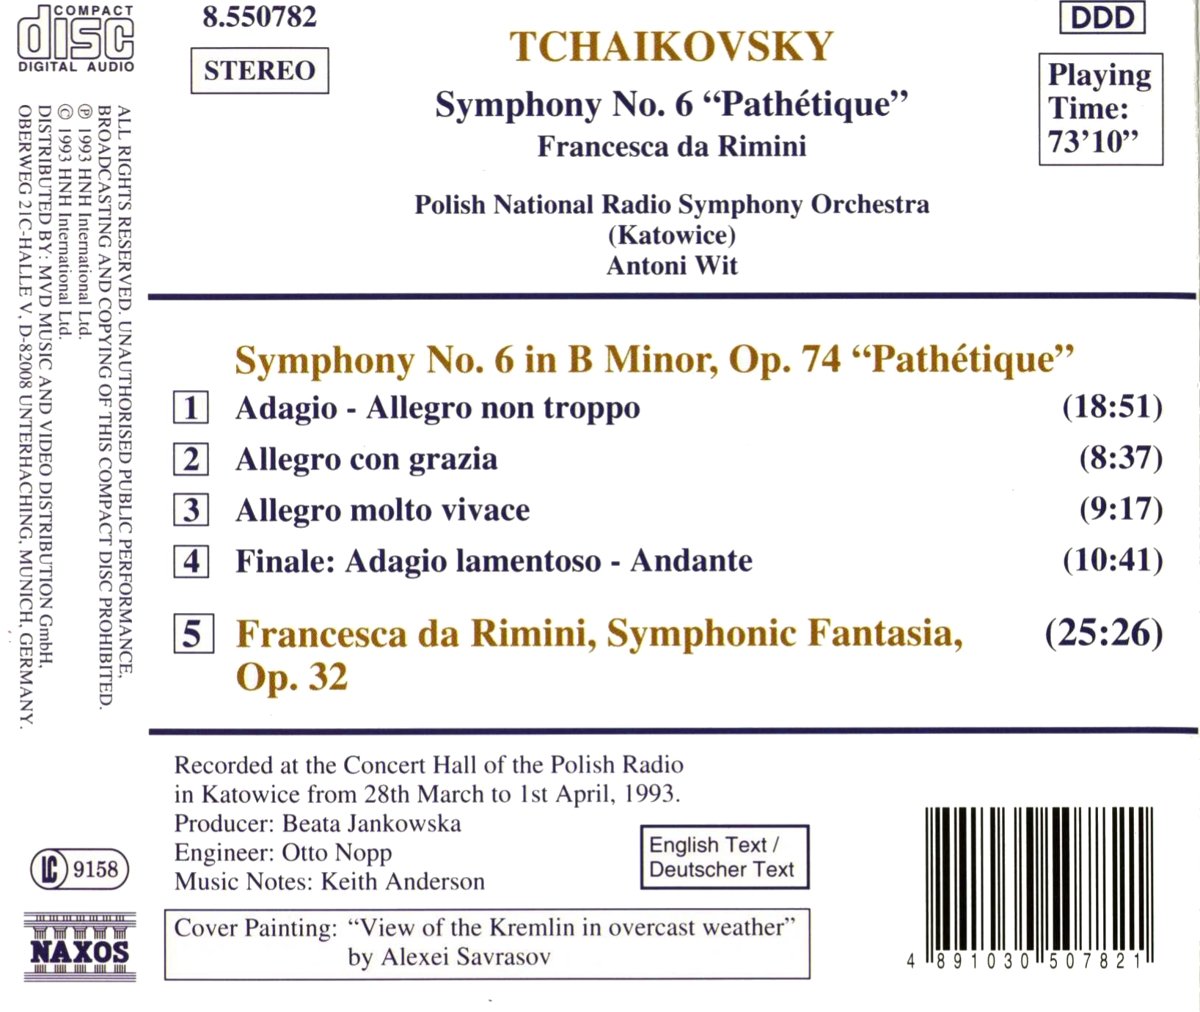 Tchaikovsky: Symphony No. 6, 'Pathetique',  Francesca da Rimini, Op. 32 - slide-1